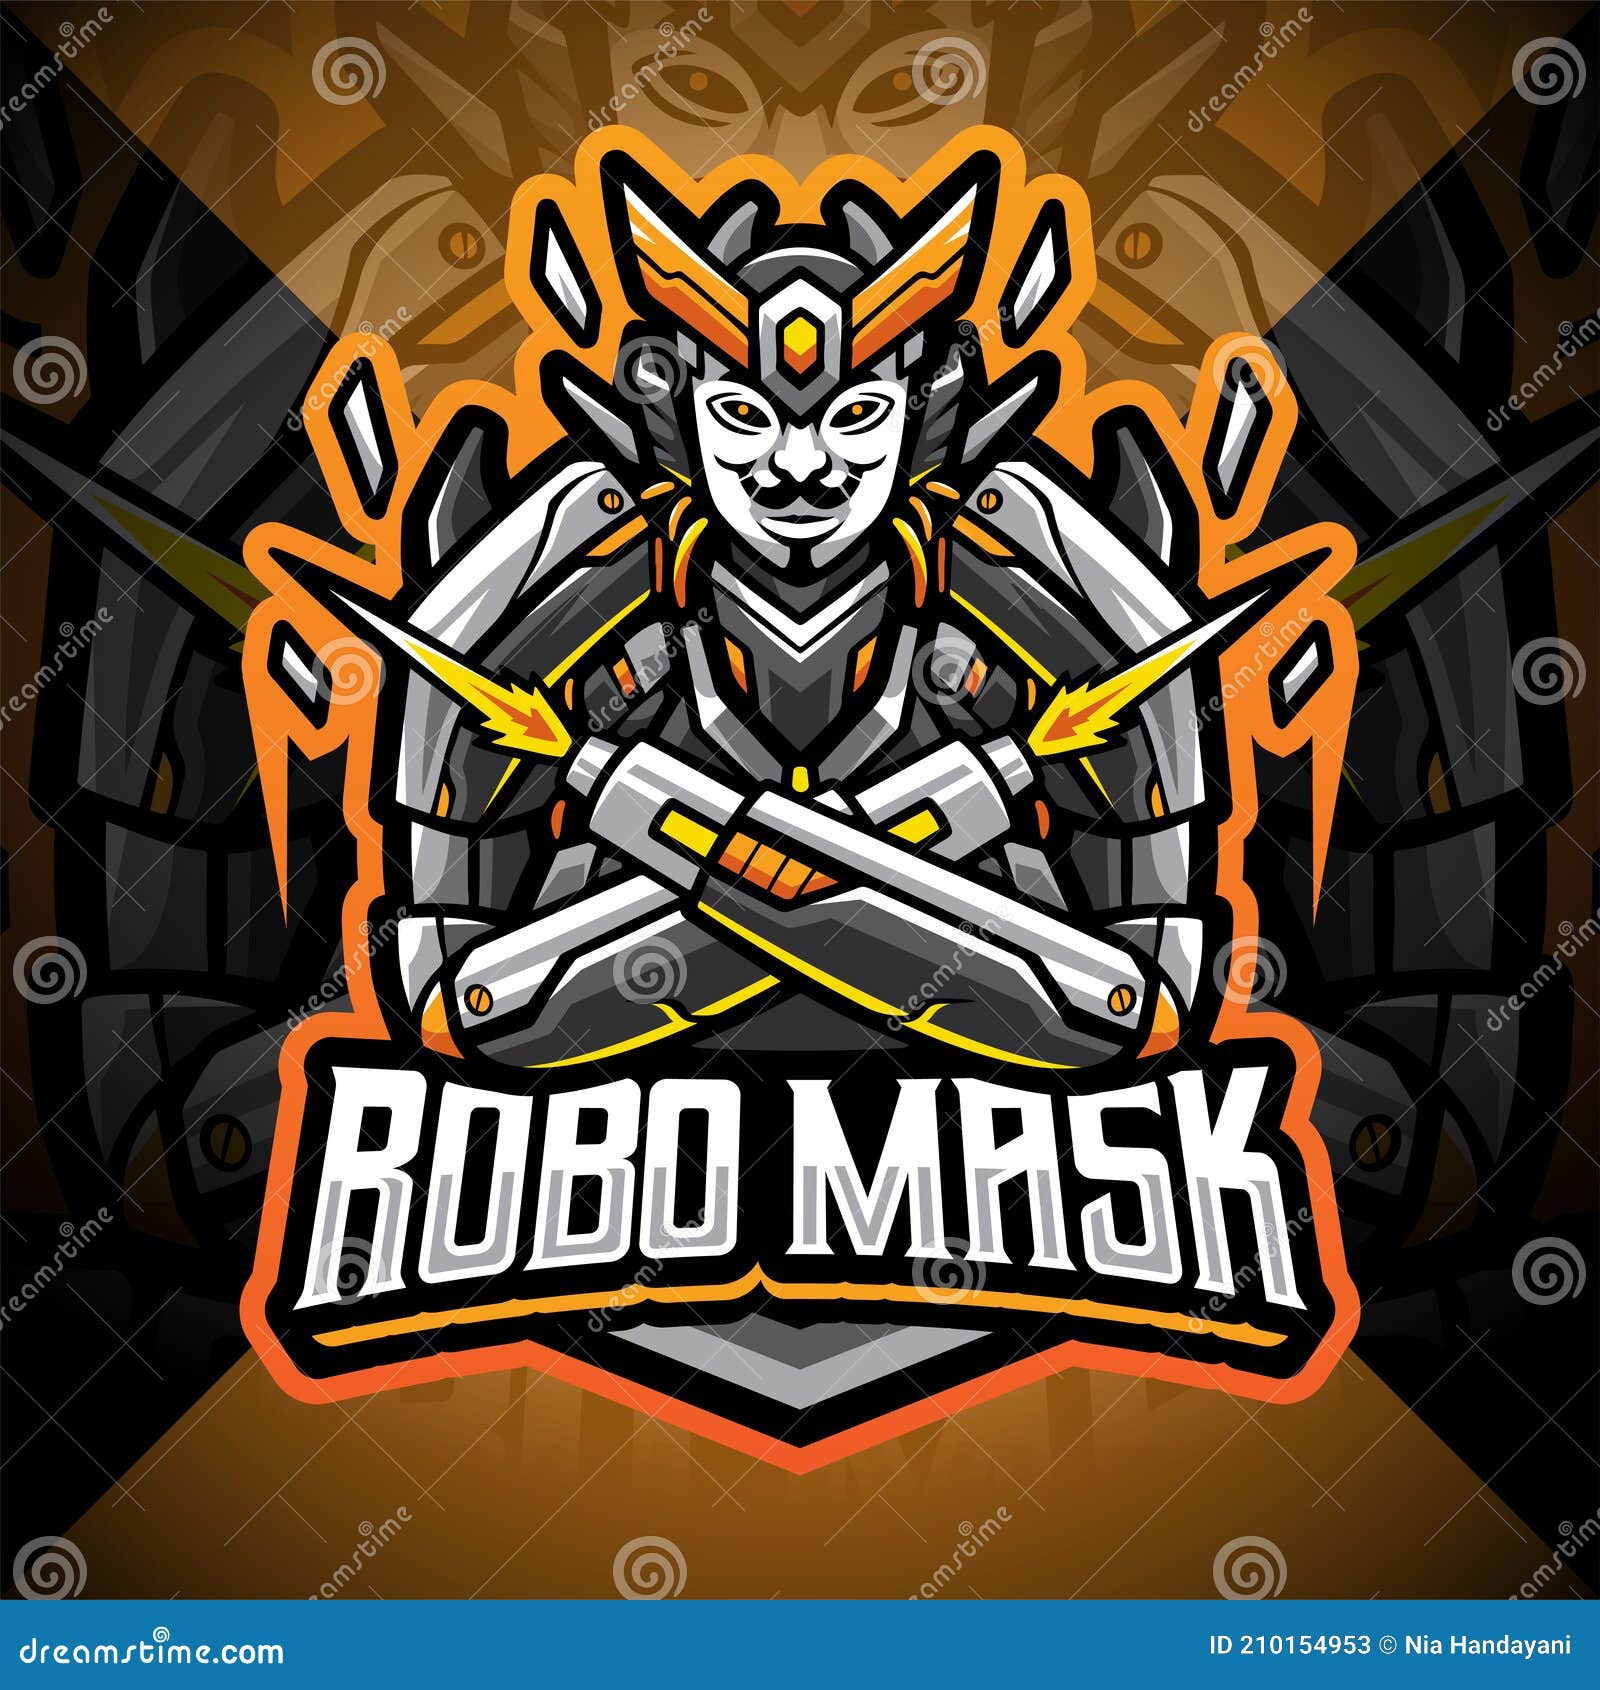 robo mask esport mascot logo